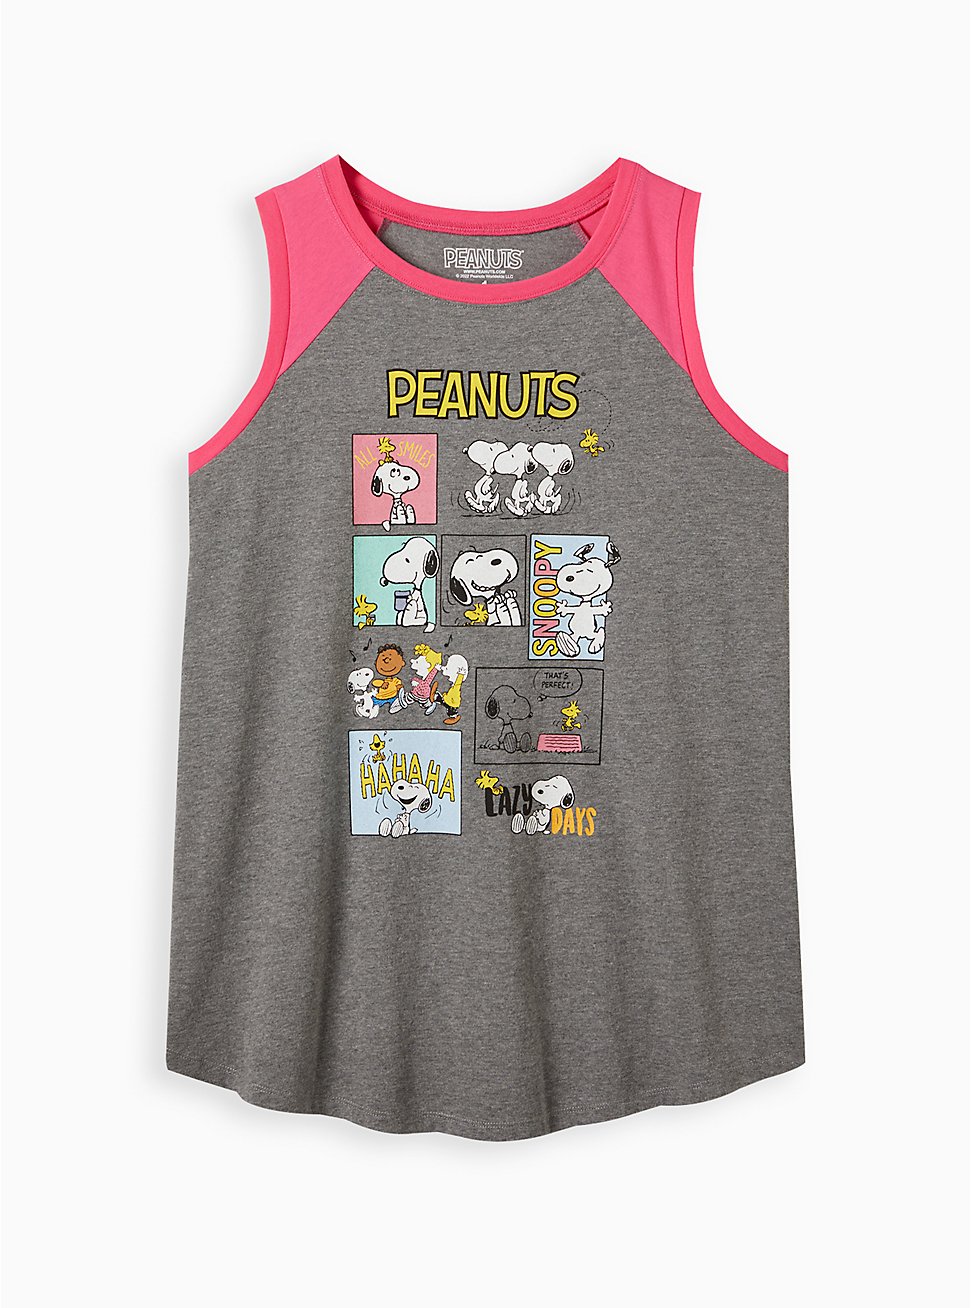 Peanuts Raglan Tank - Pink & Grey, MEDIUM HEATHER GREY, hi-res